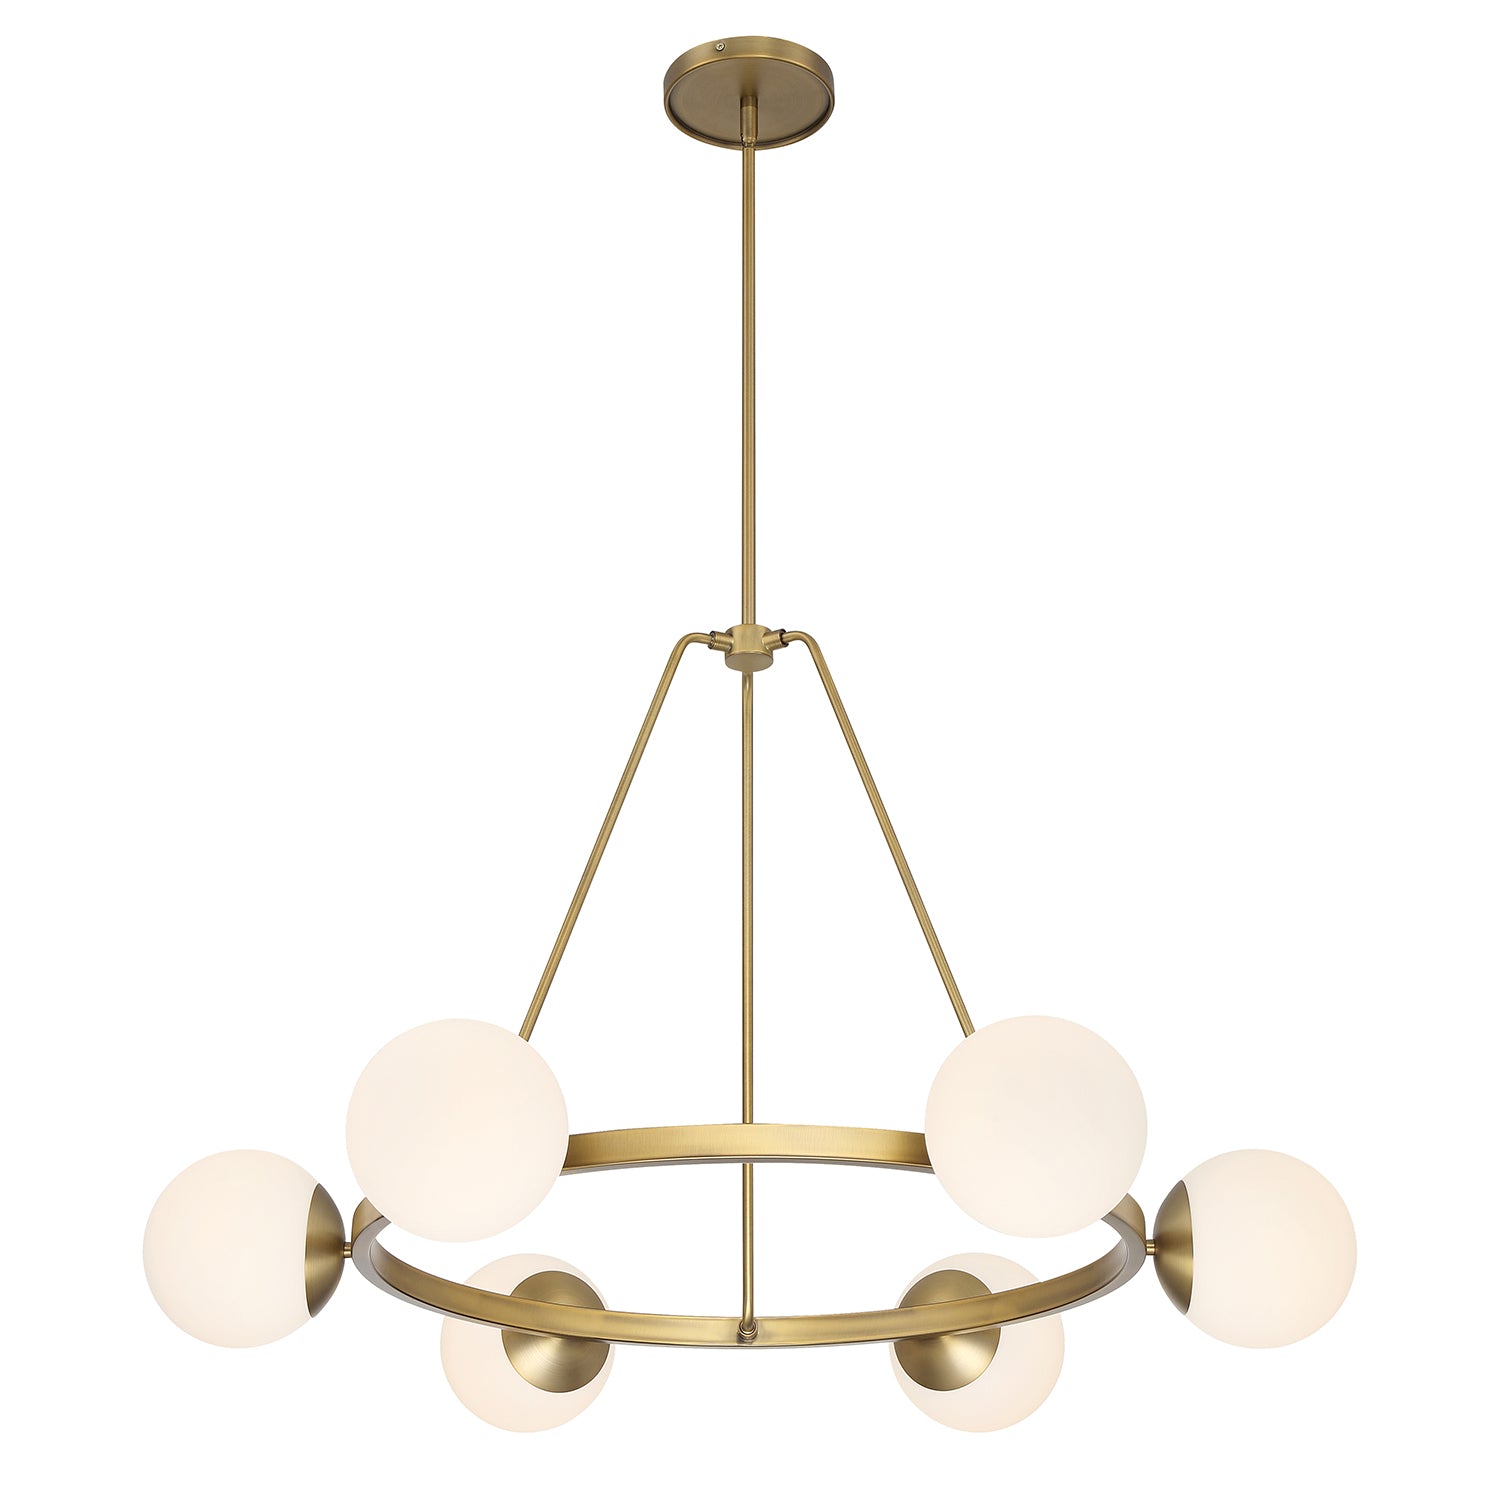 Castell 6 Globe Round LED Chandelier, Aged Brass